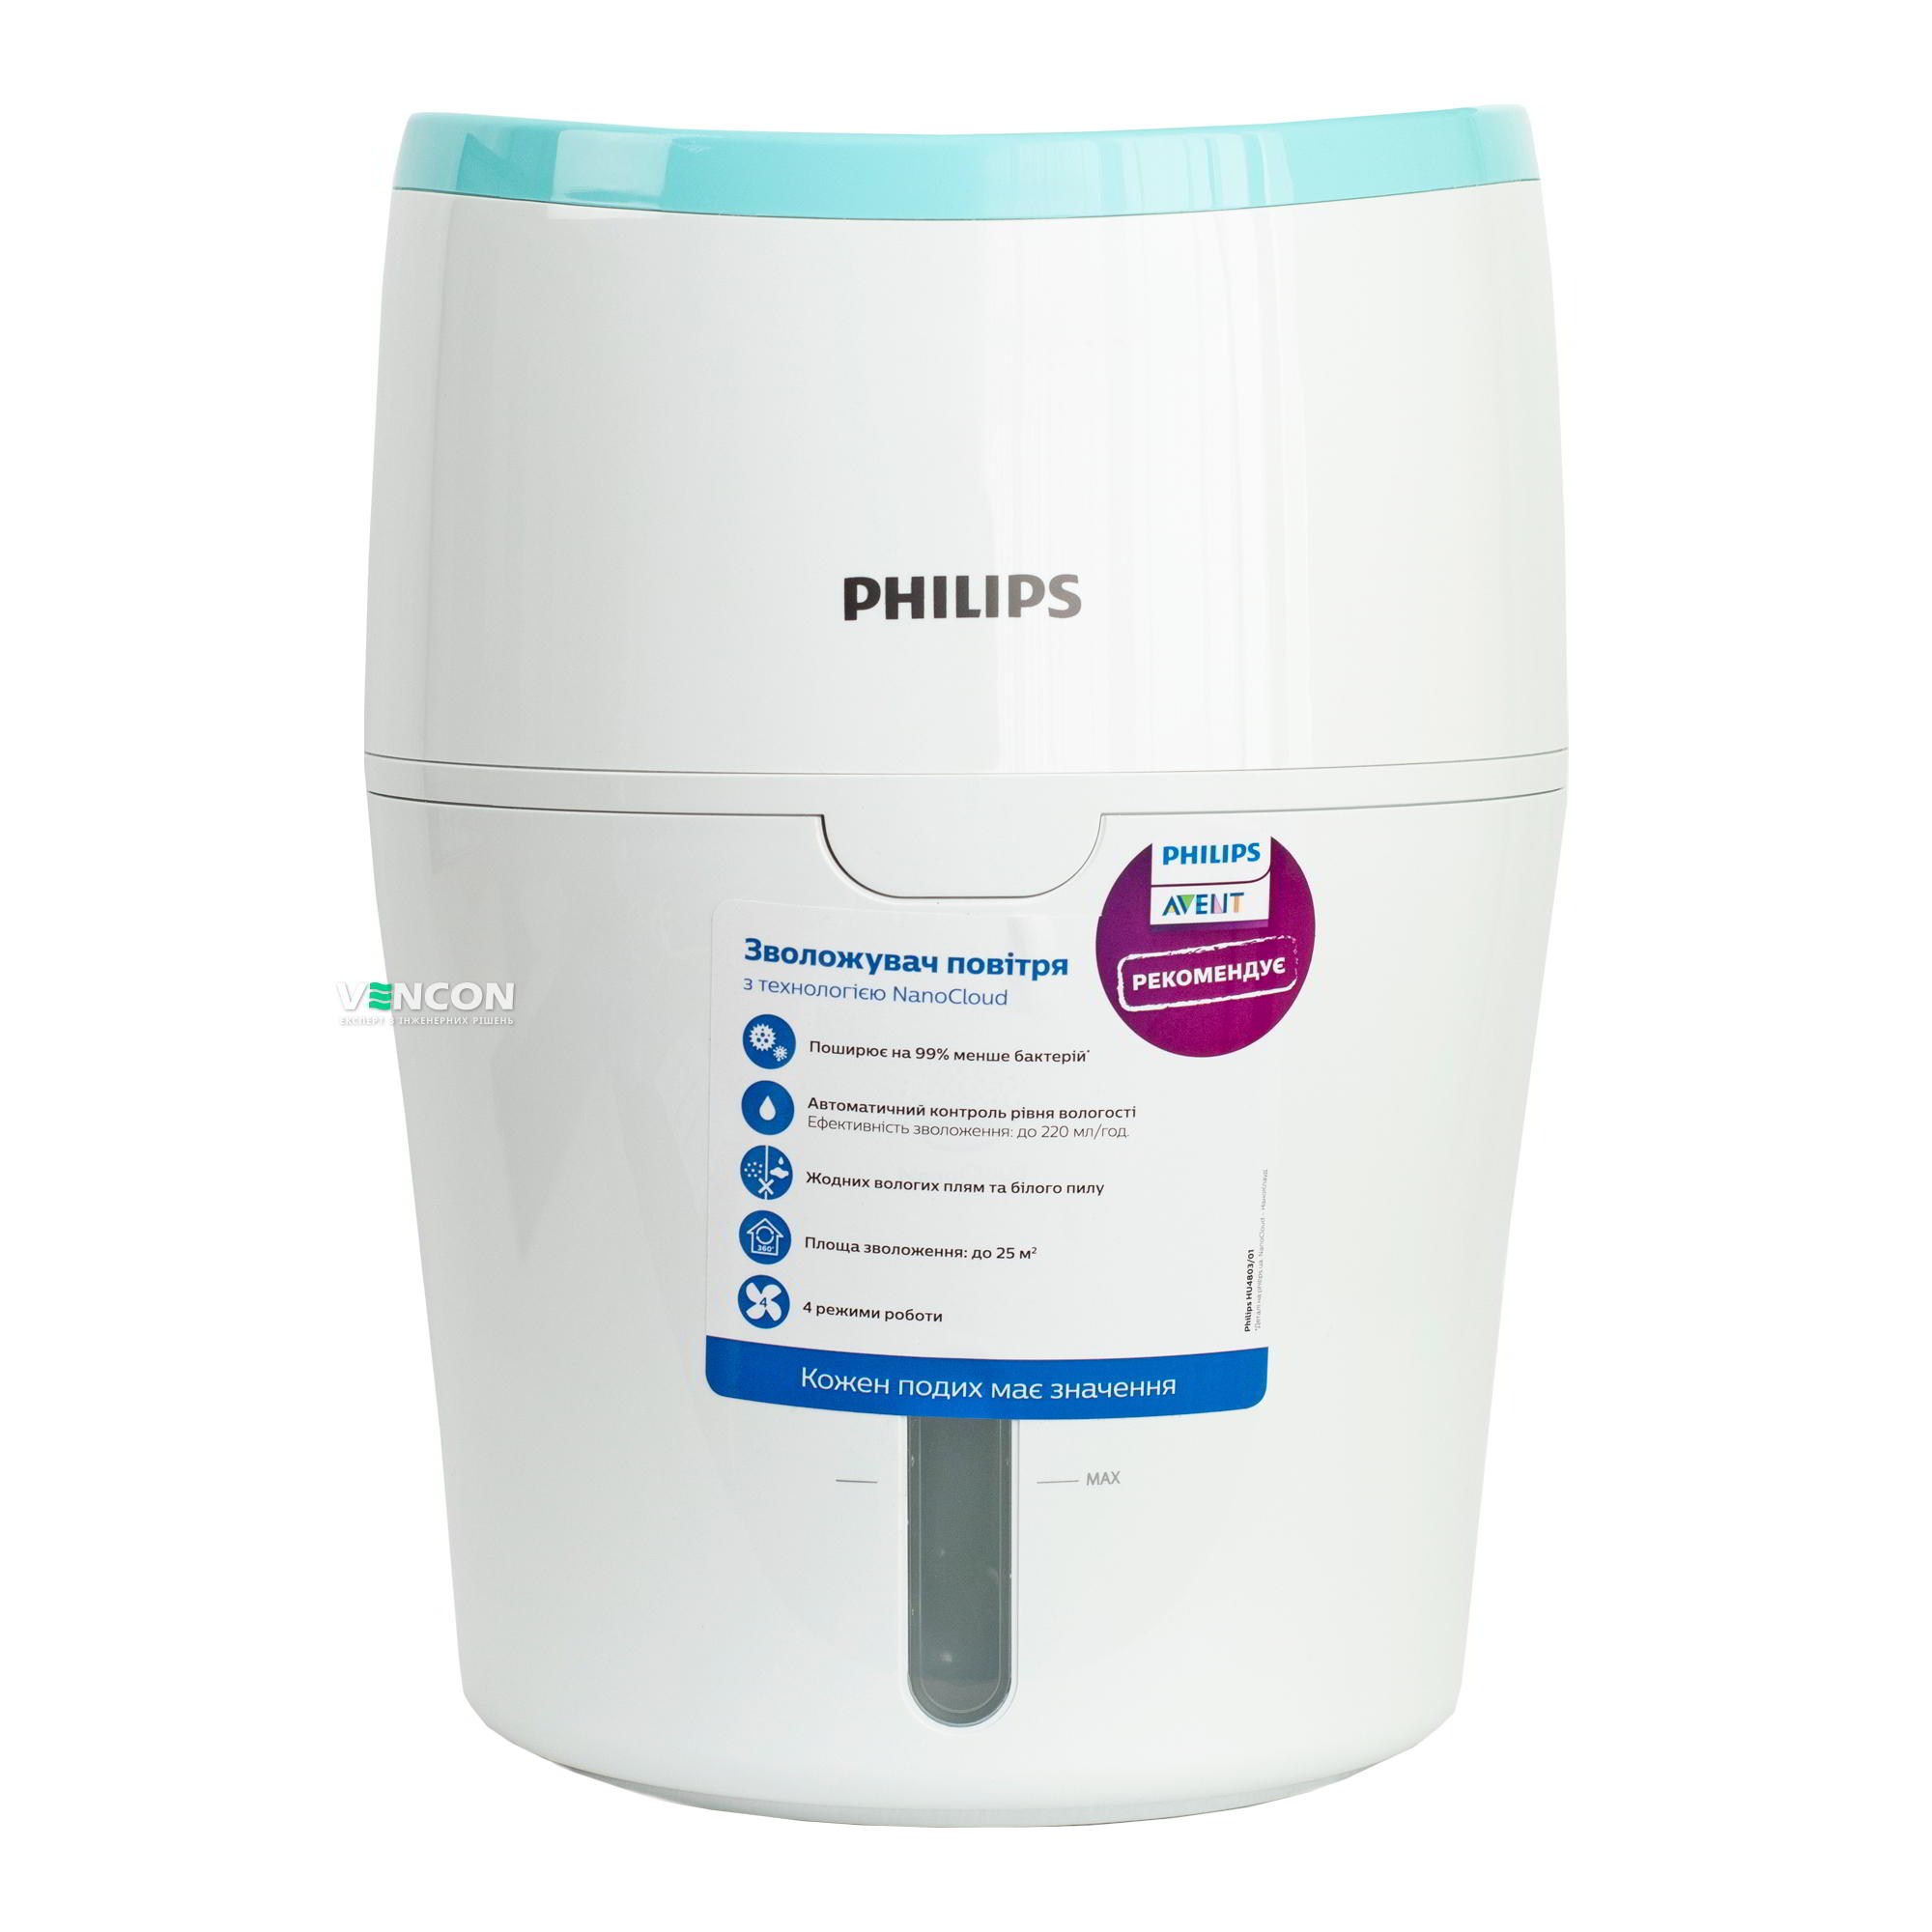 Philips HU4801/01